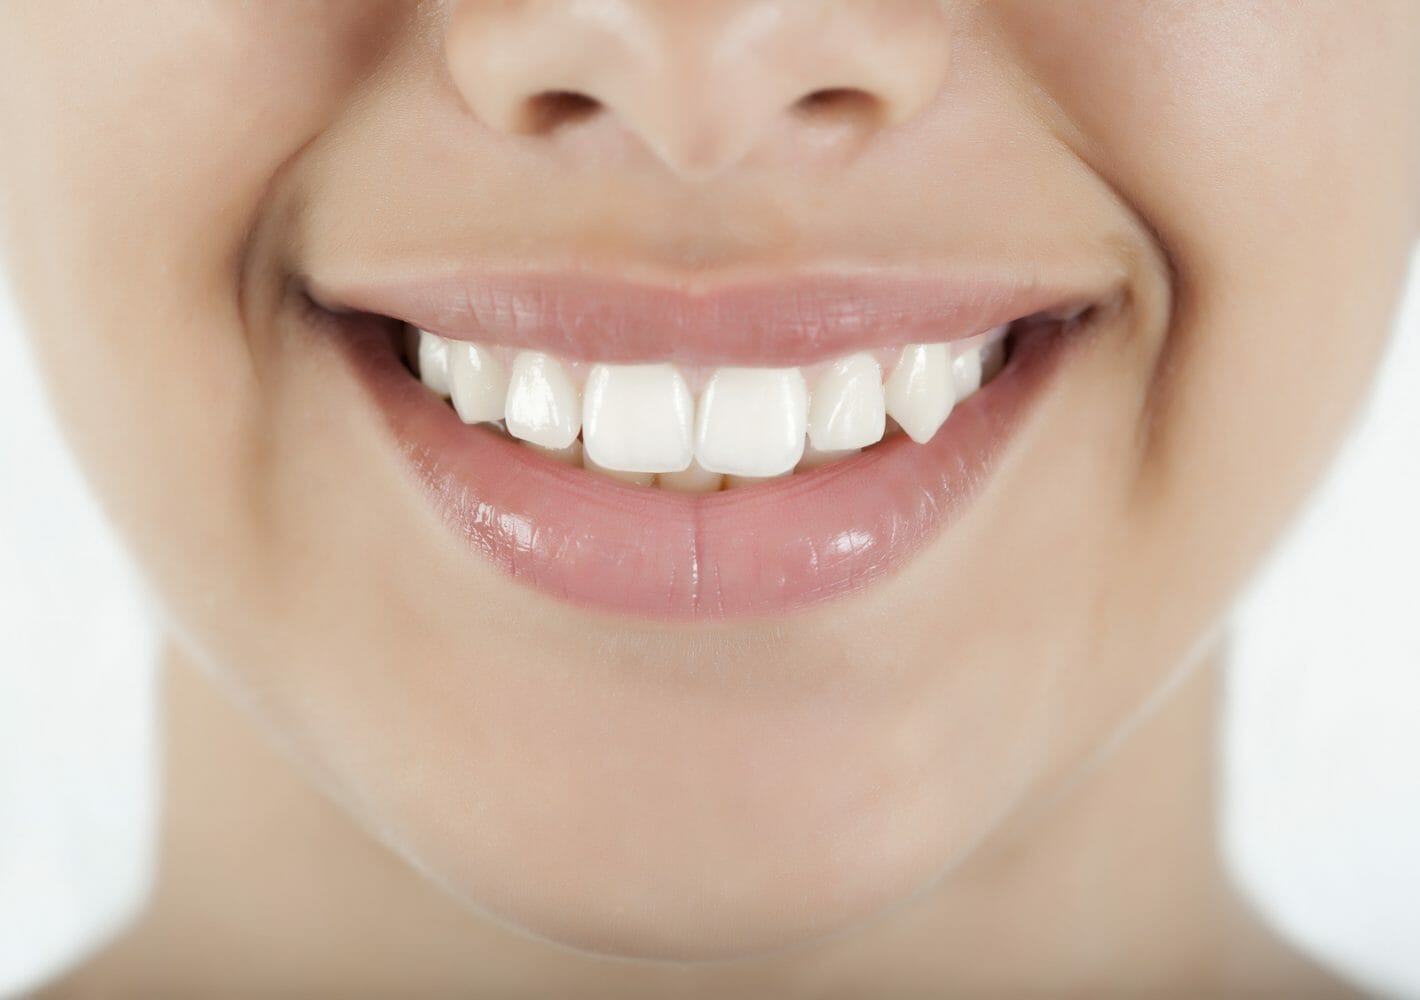 Are Crooked Teeth Genetic?